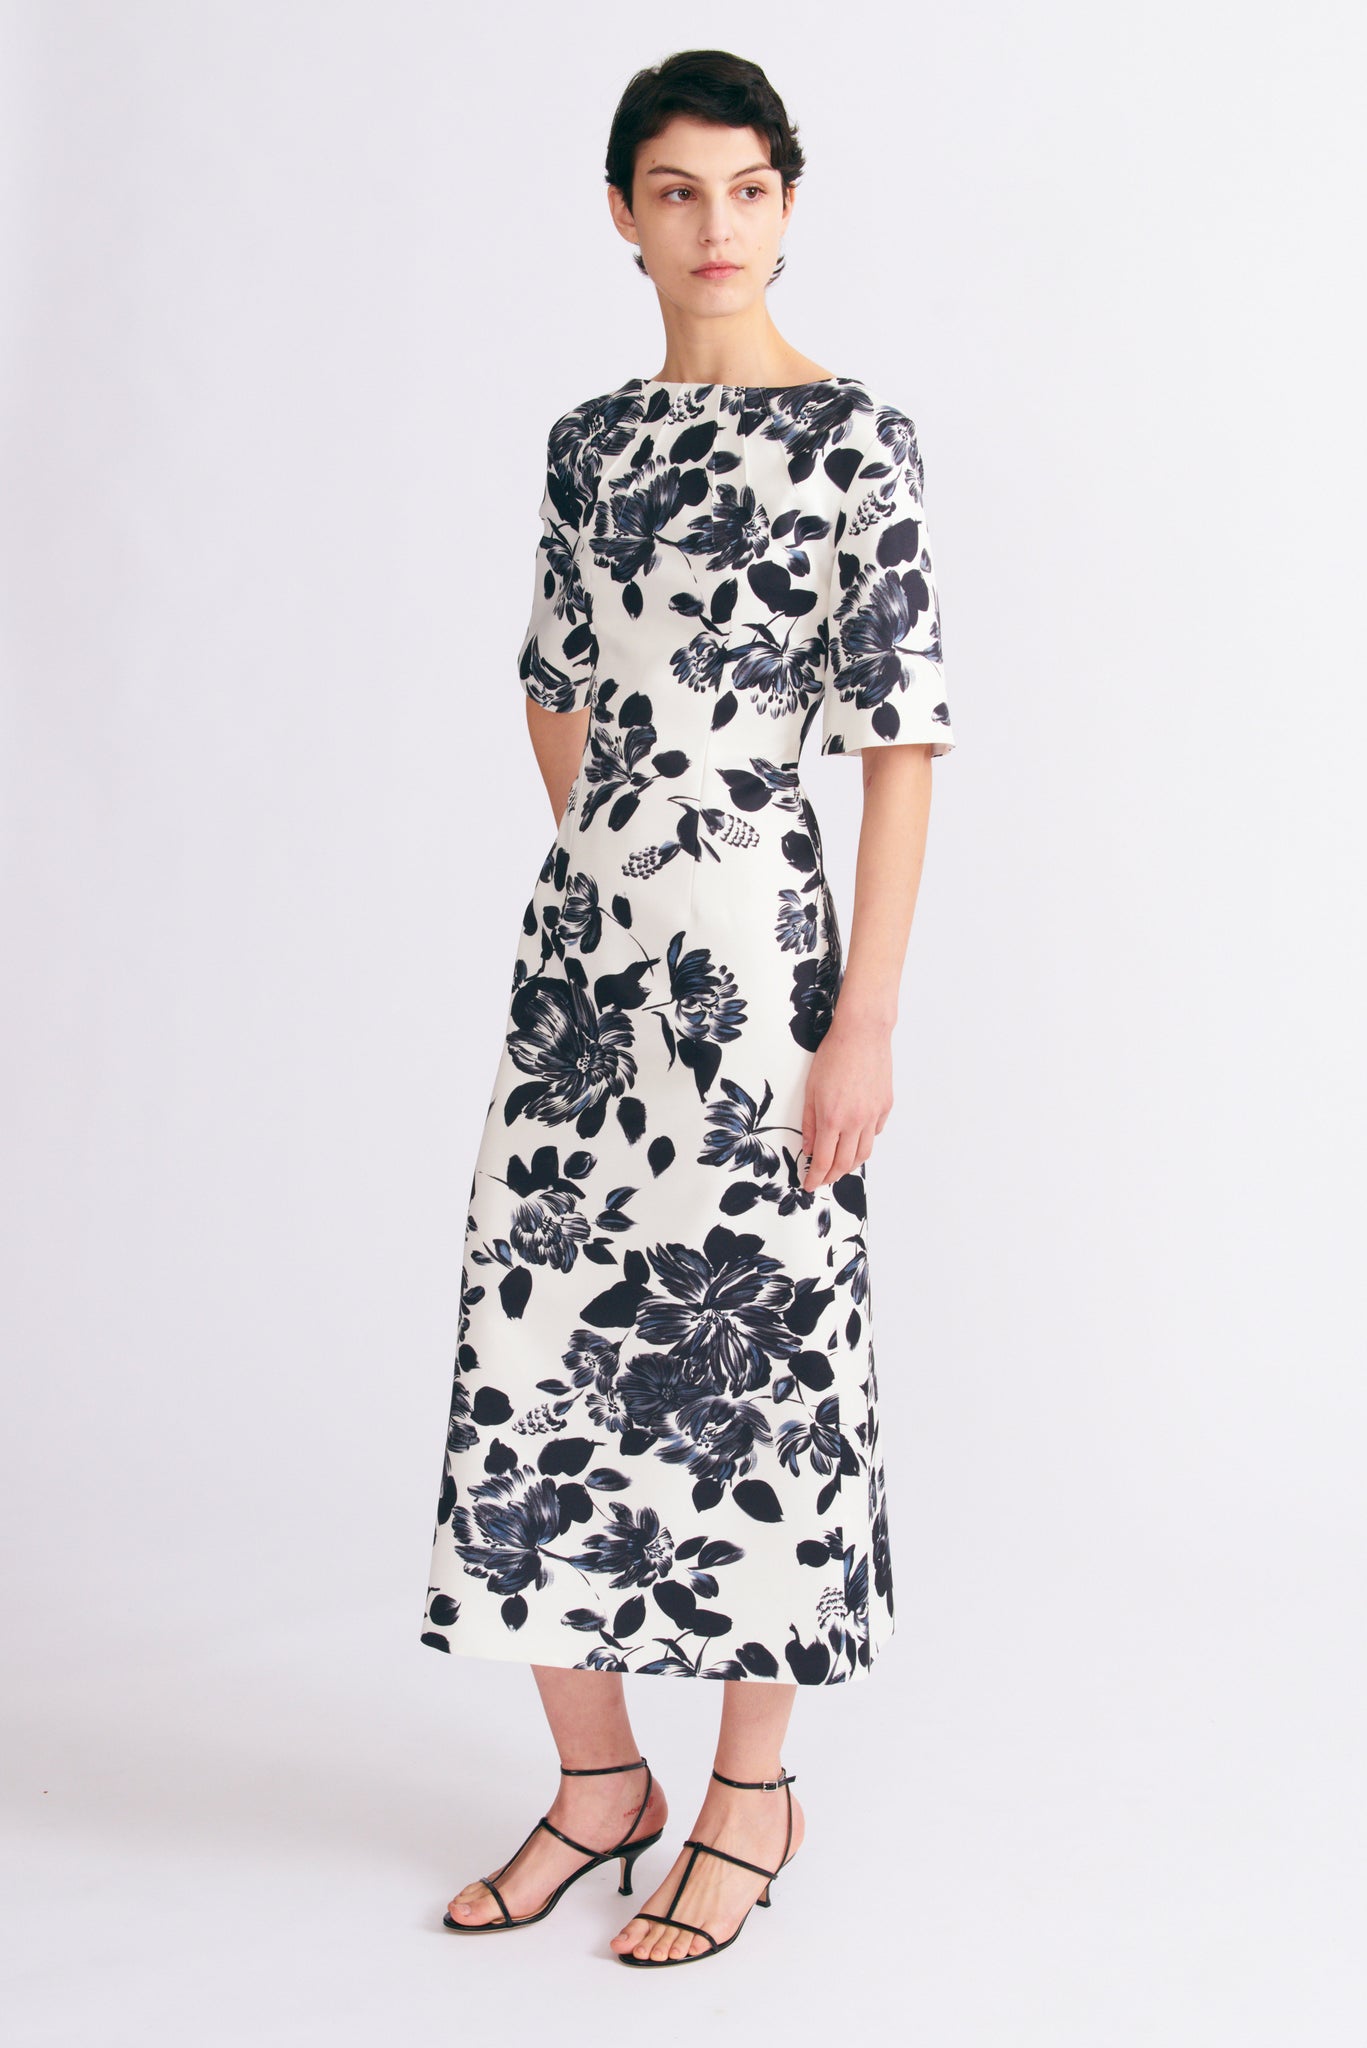 Kora Dress in Black and White Floral Print on Twill | Emilia Wickstead